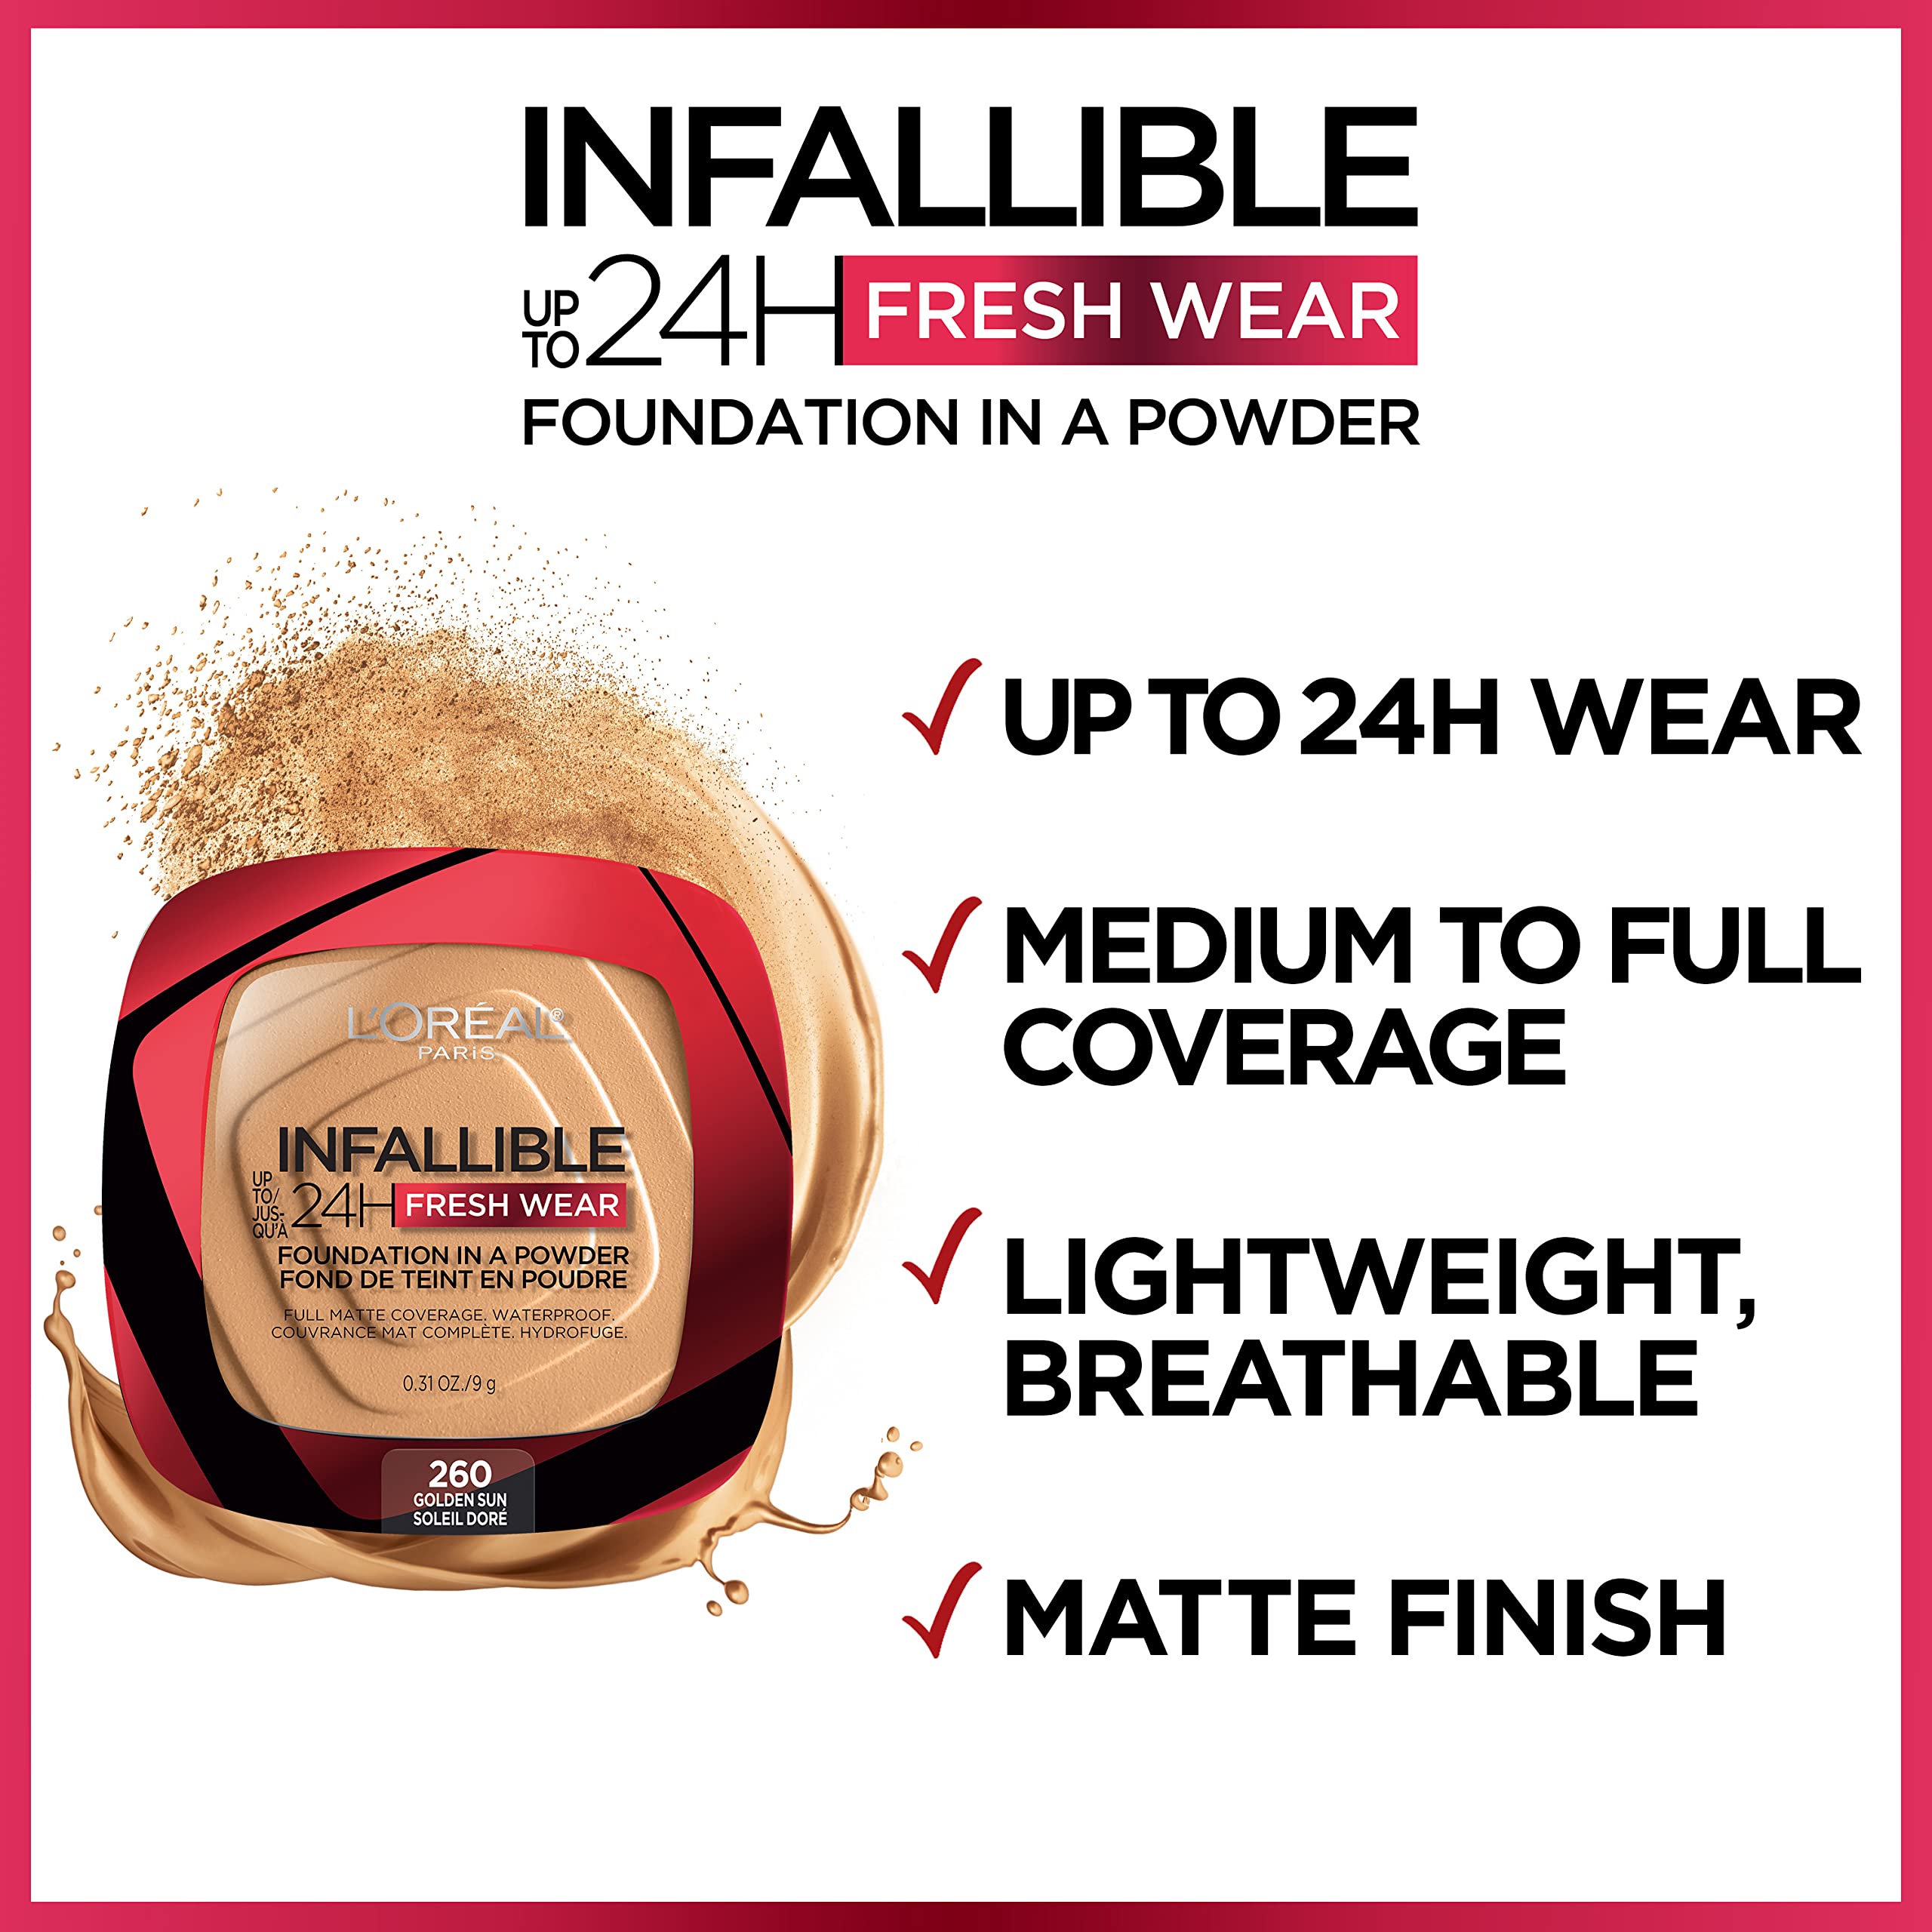 L’Oreal Paris Makeup Infallible Fresh Wear Foundation in a Powder, Up to 24H Wear, Waterproof, True Beige, 0.31 oz.